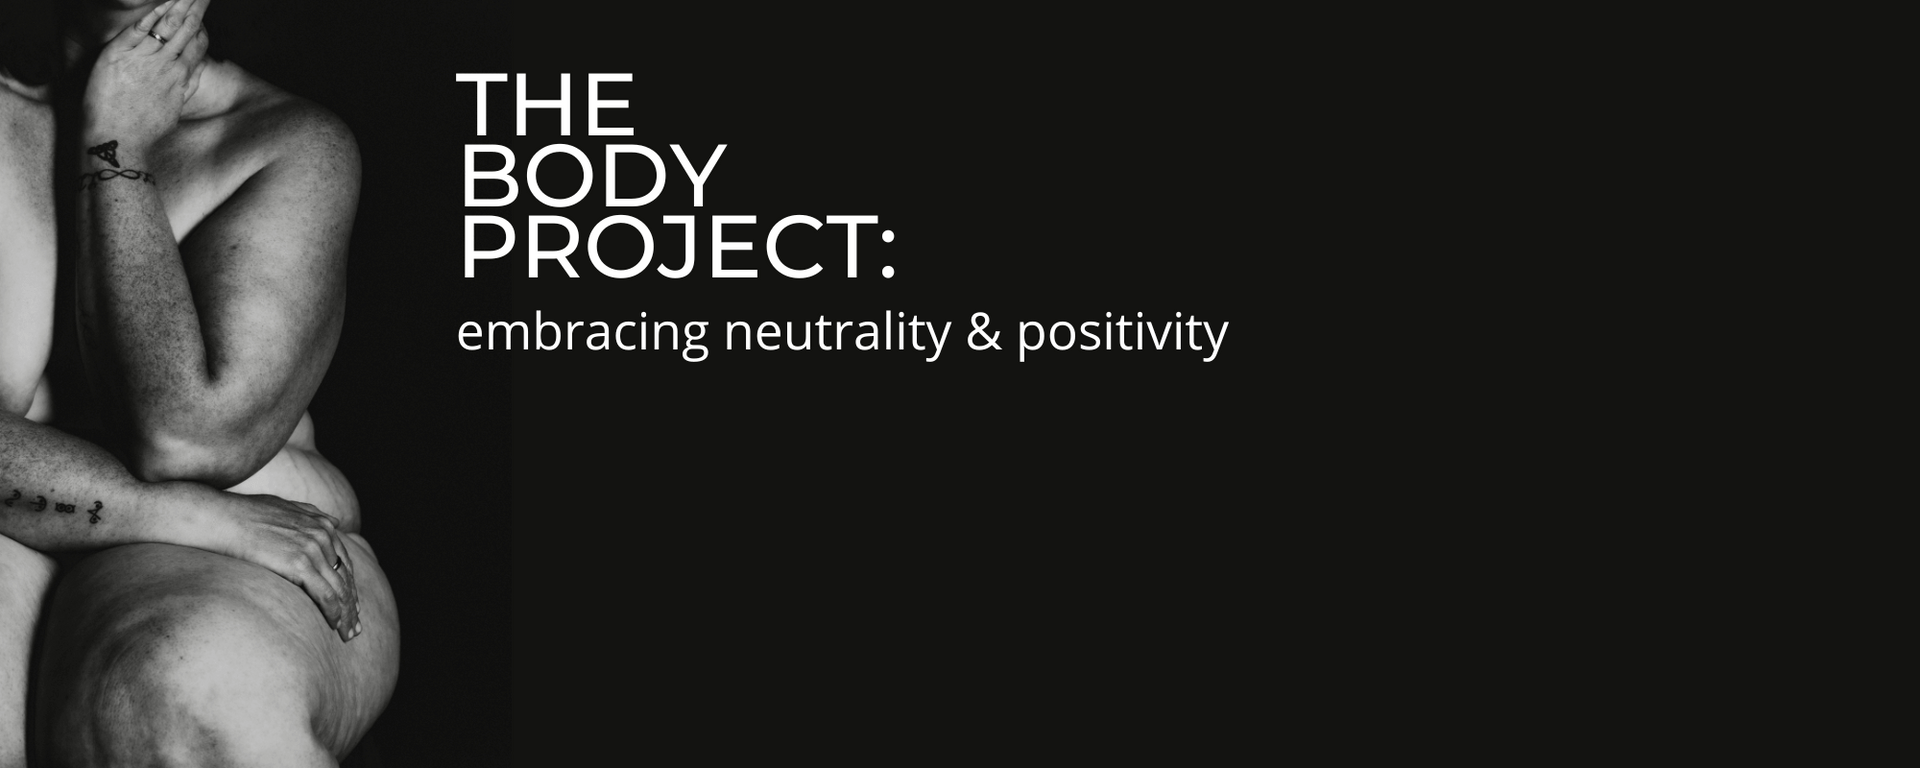 THE BODY PROJECT: embracing body neutrality & positivity